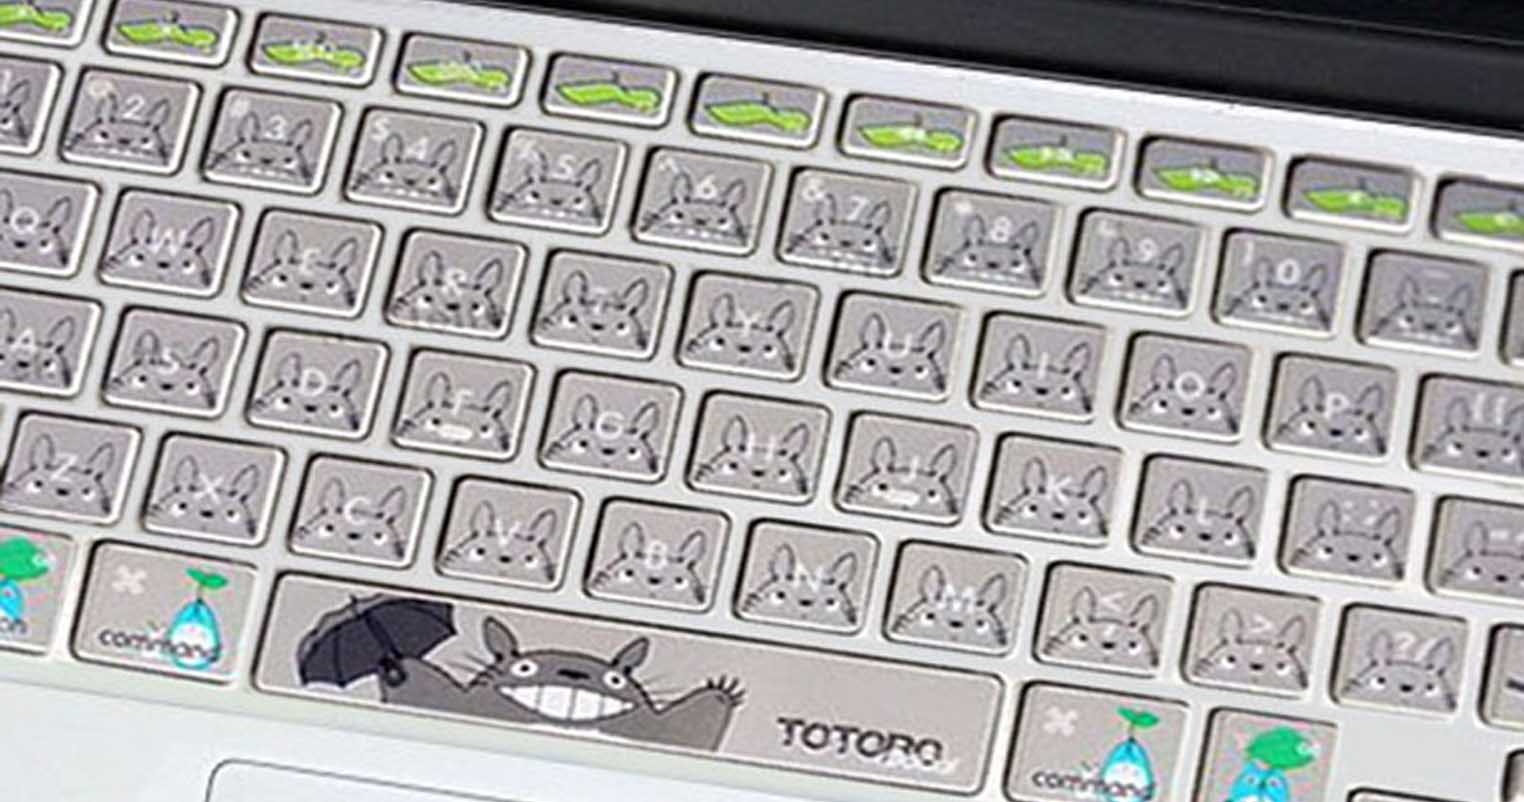 My Neighbor Totoro Keyboard Decals